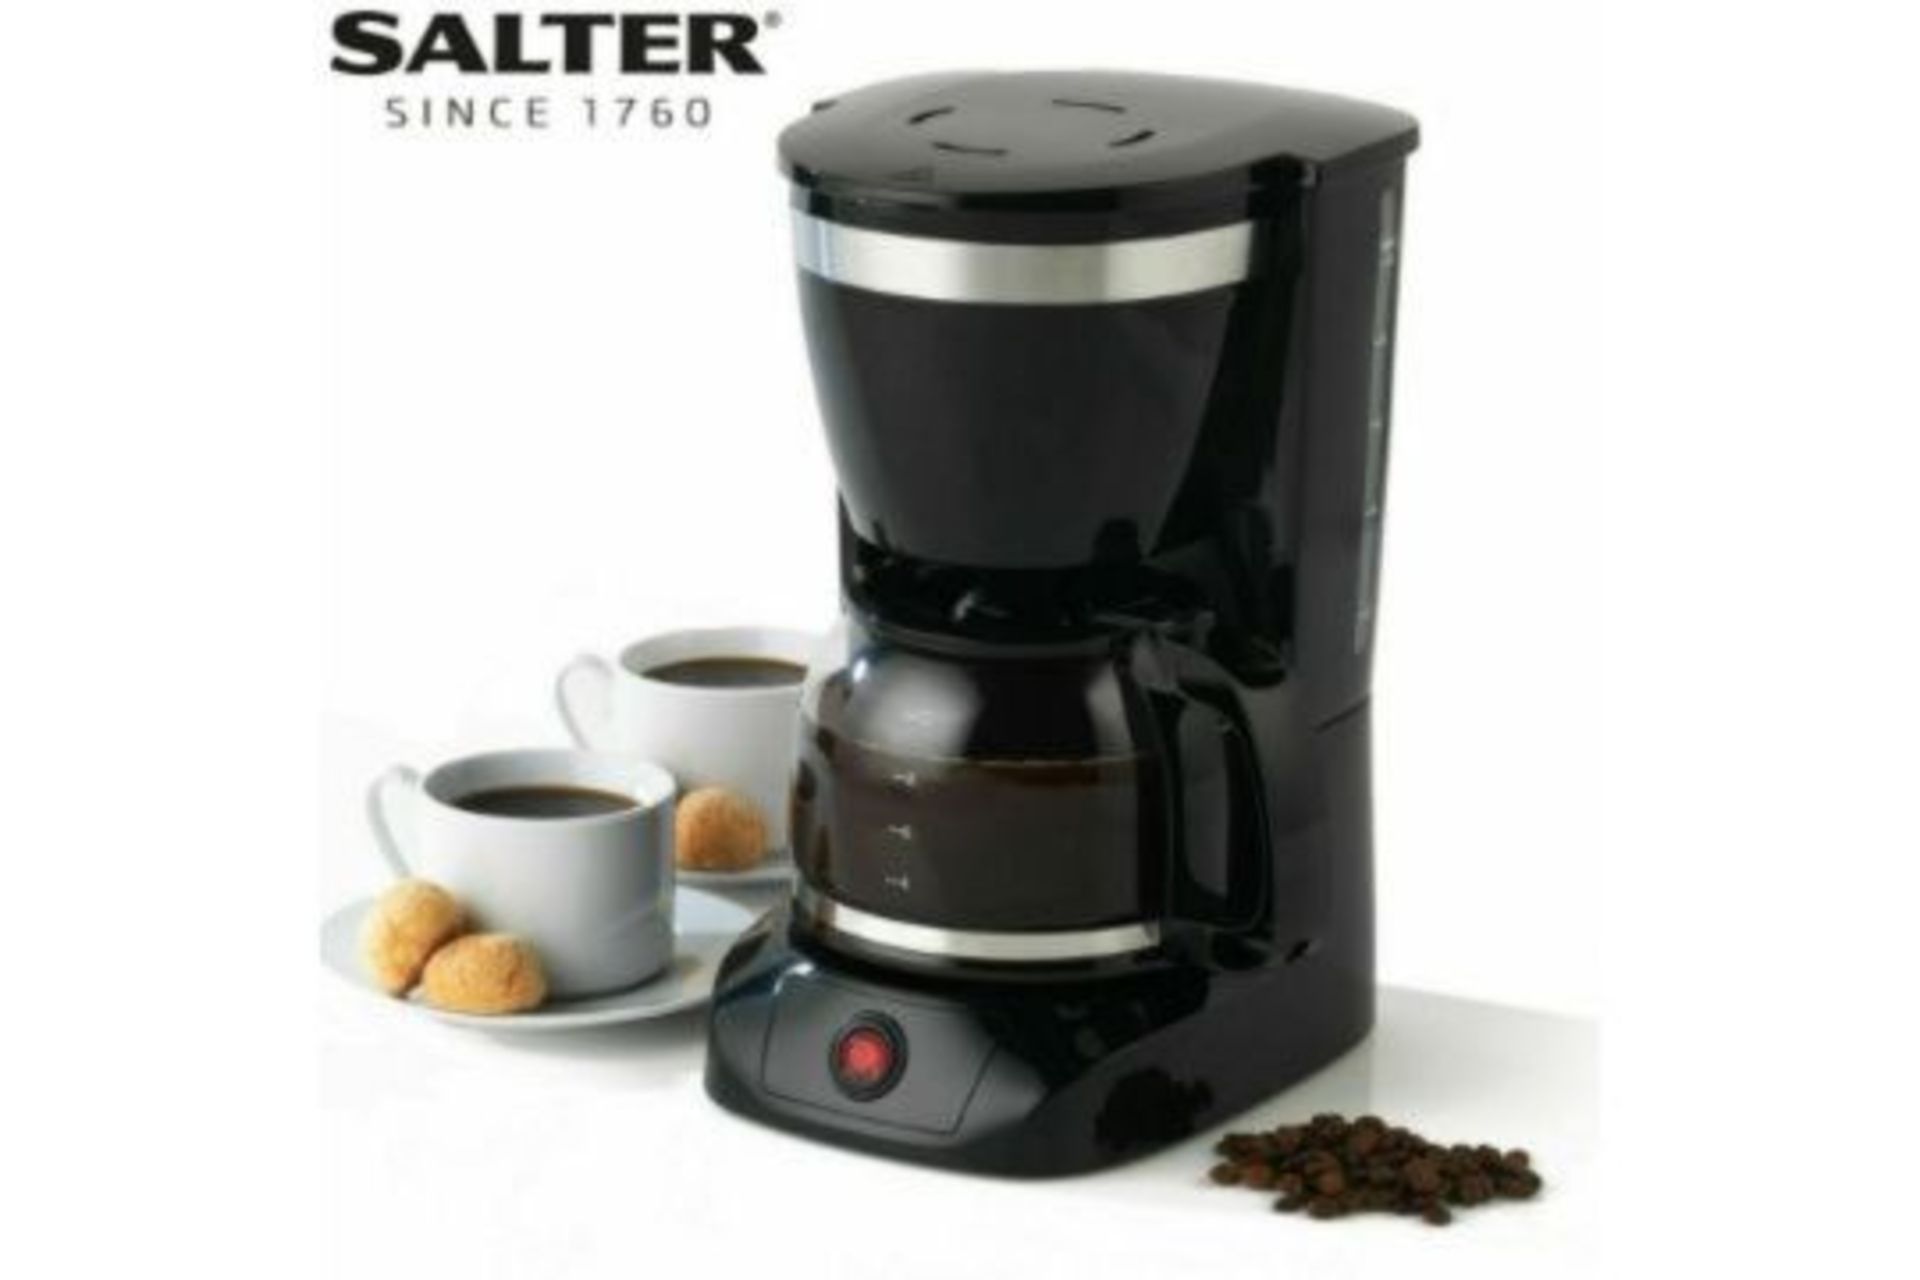 BRAND NEW SALTER DECO DRIP 1.25L 800W 10 CUP COFFEE MAKER - RRP £24.